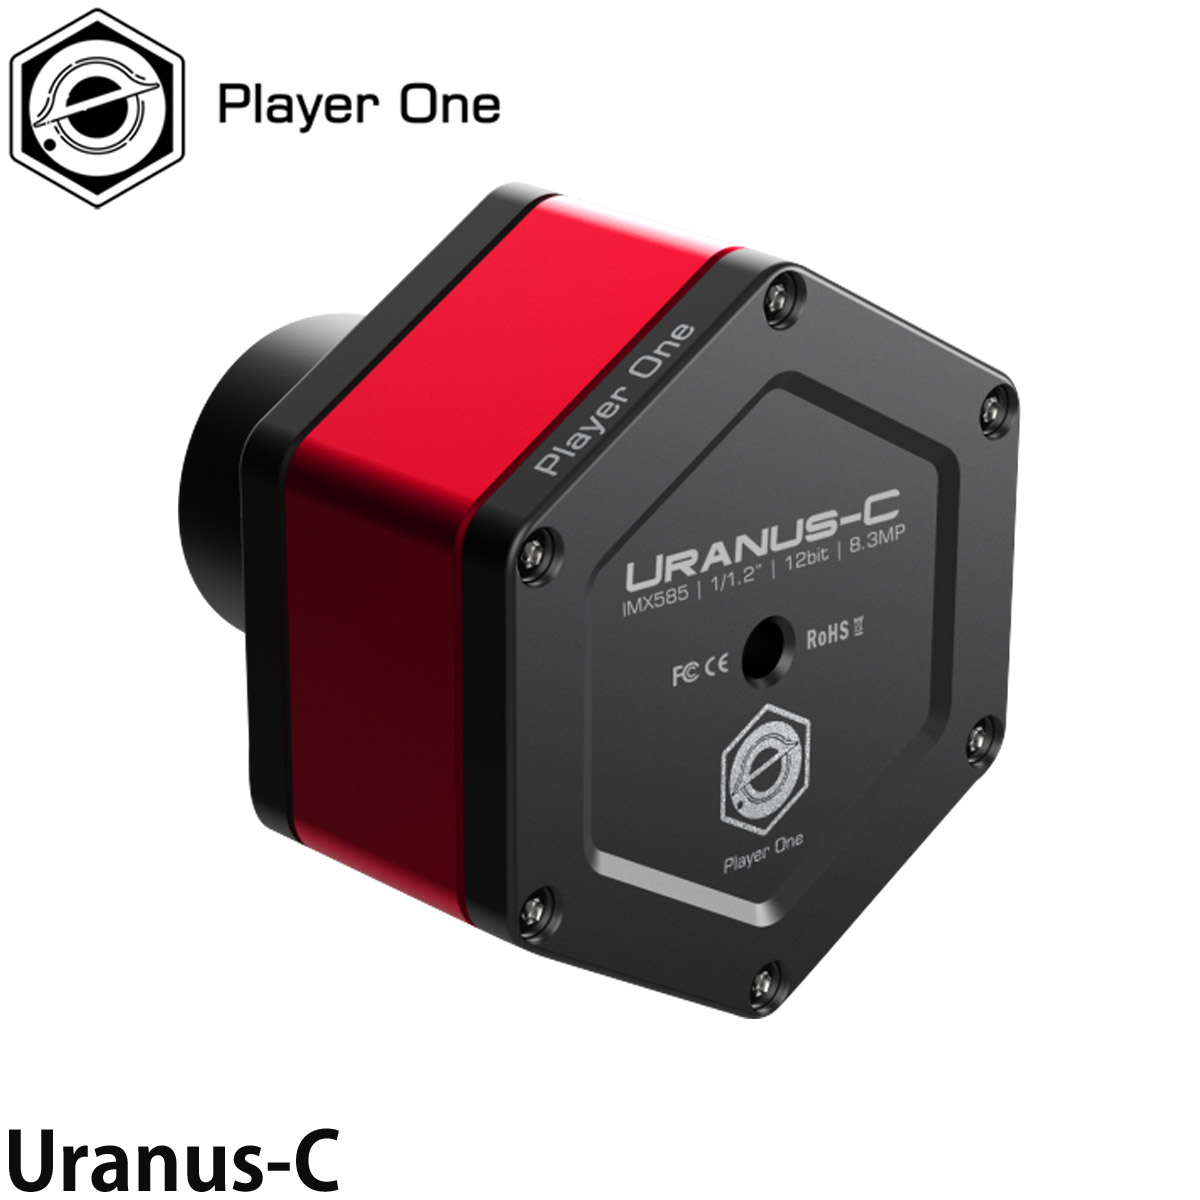 Player one Uranus-Cの商品画像